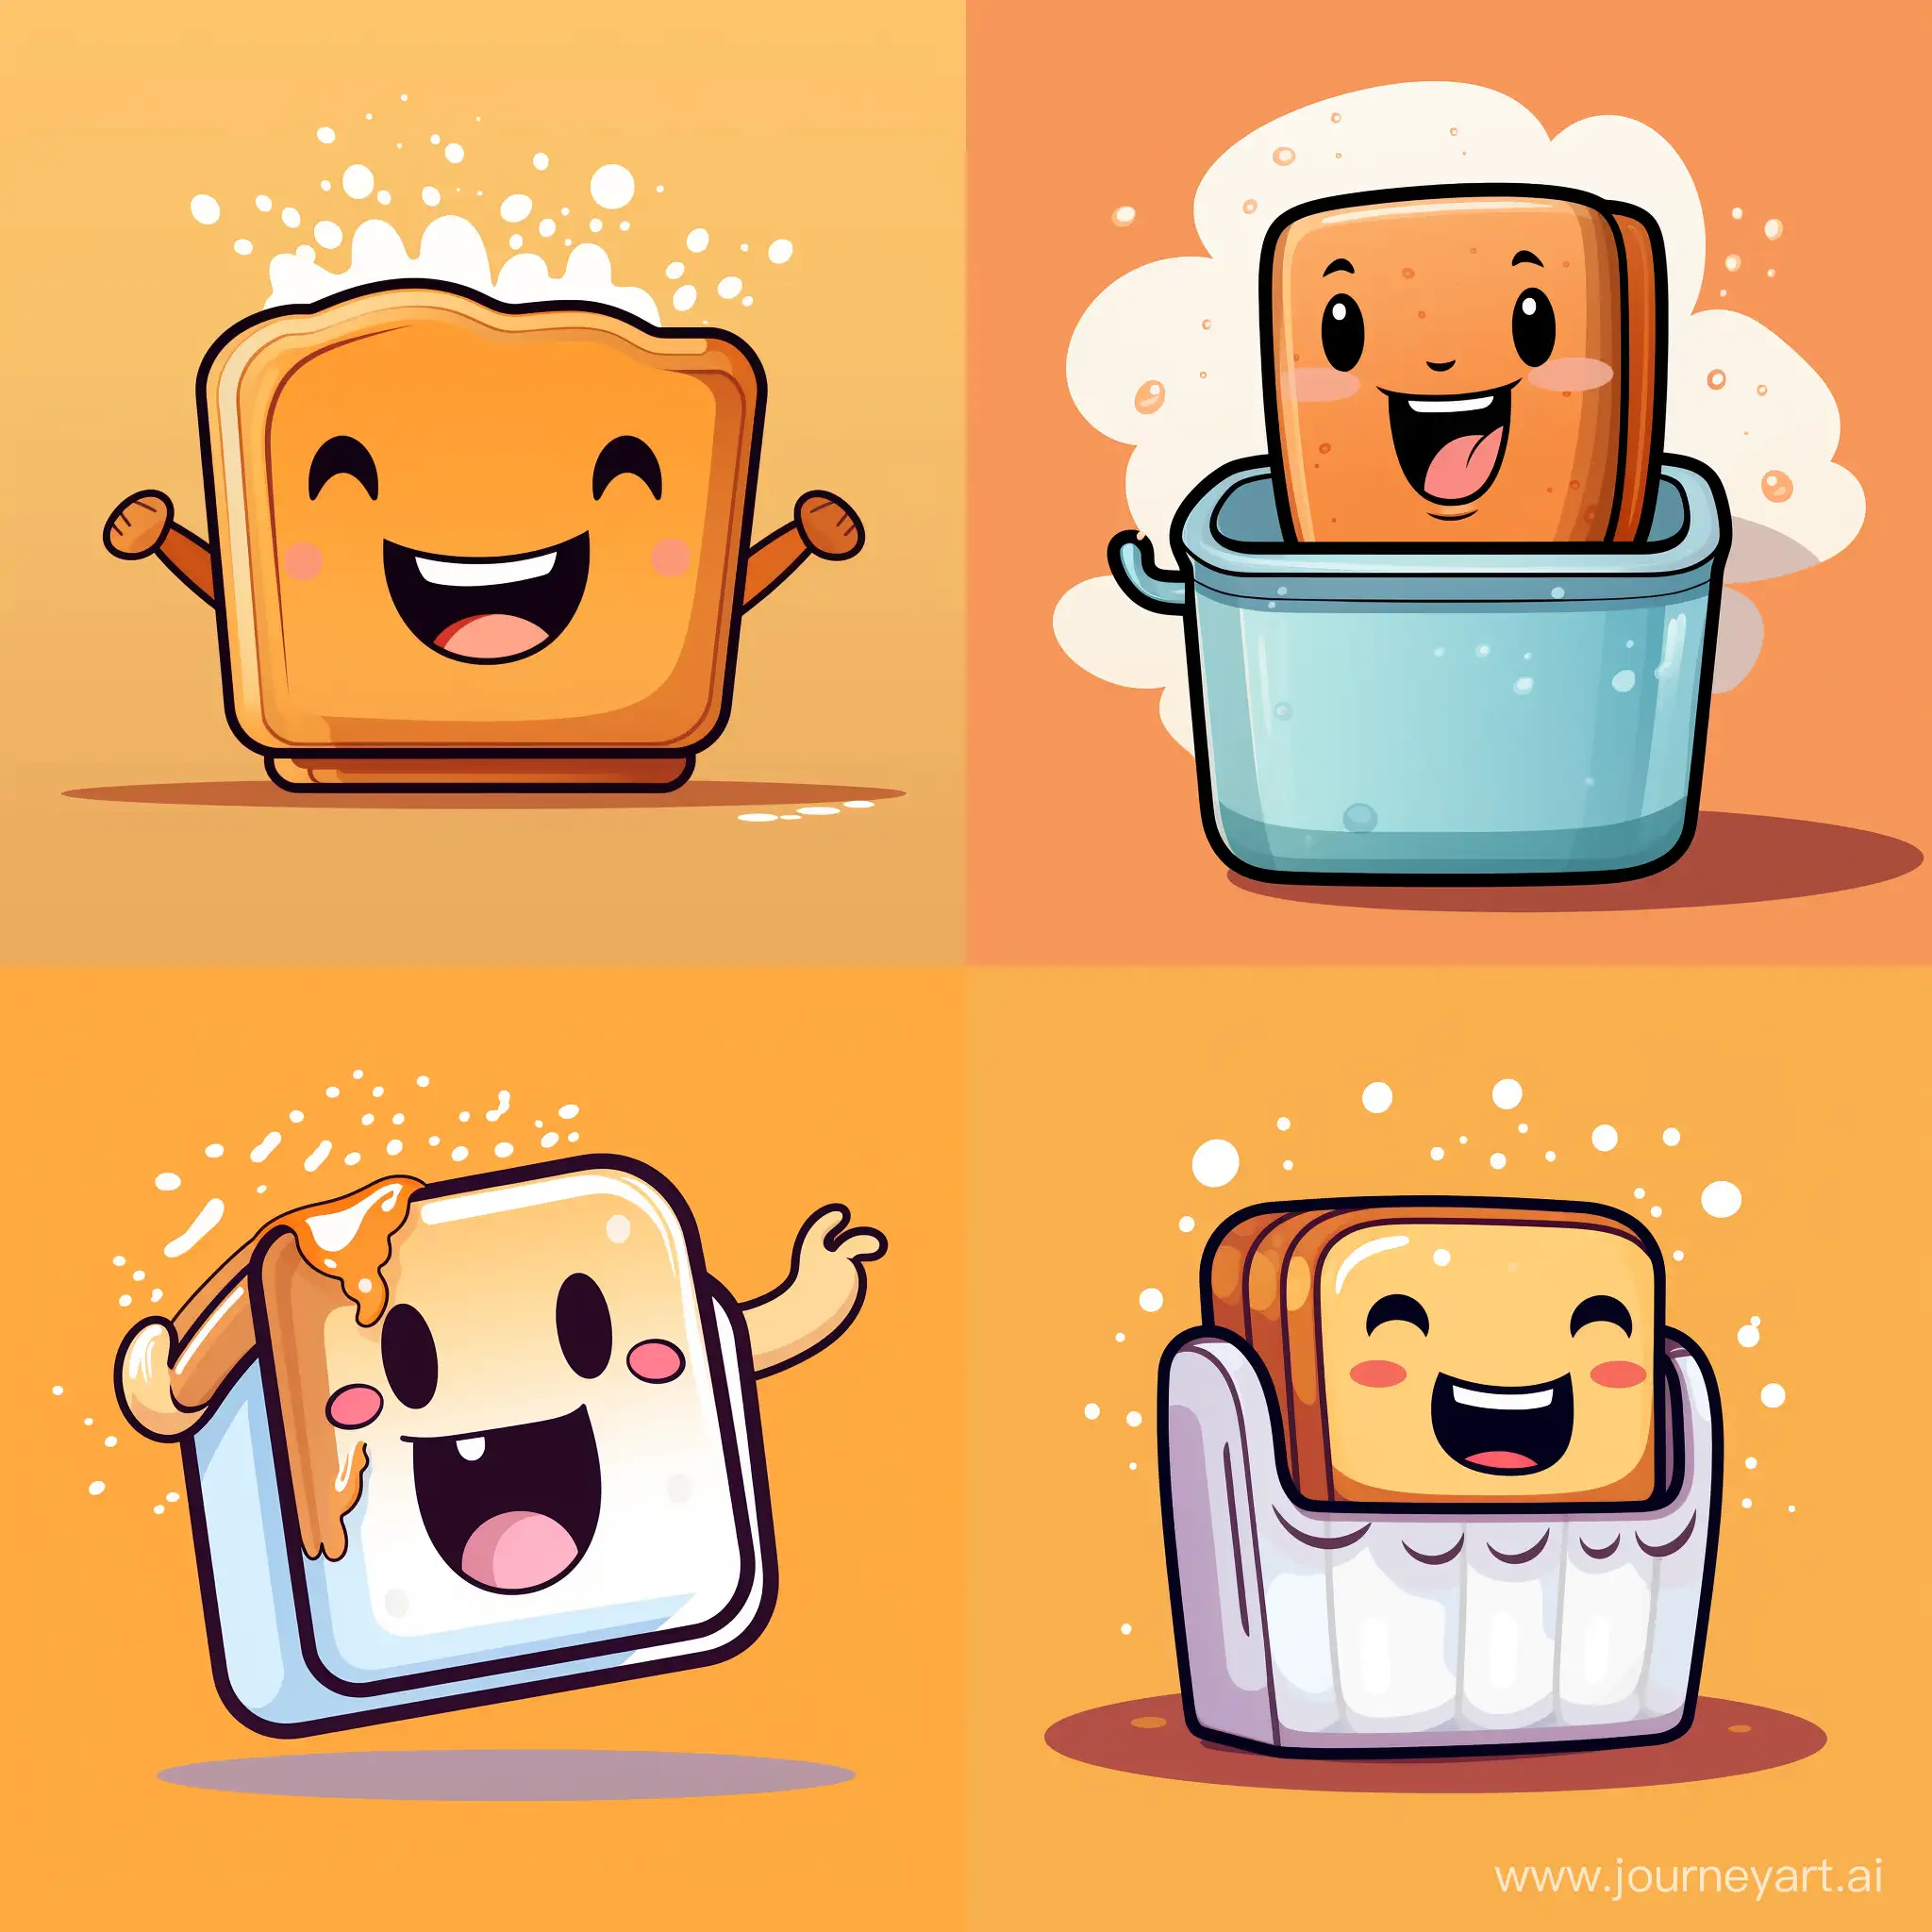 Smiling-Profile-Icon-Quirky-Illustration-of-Toaster-Bathtub-Mishap